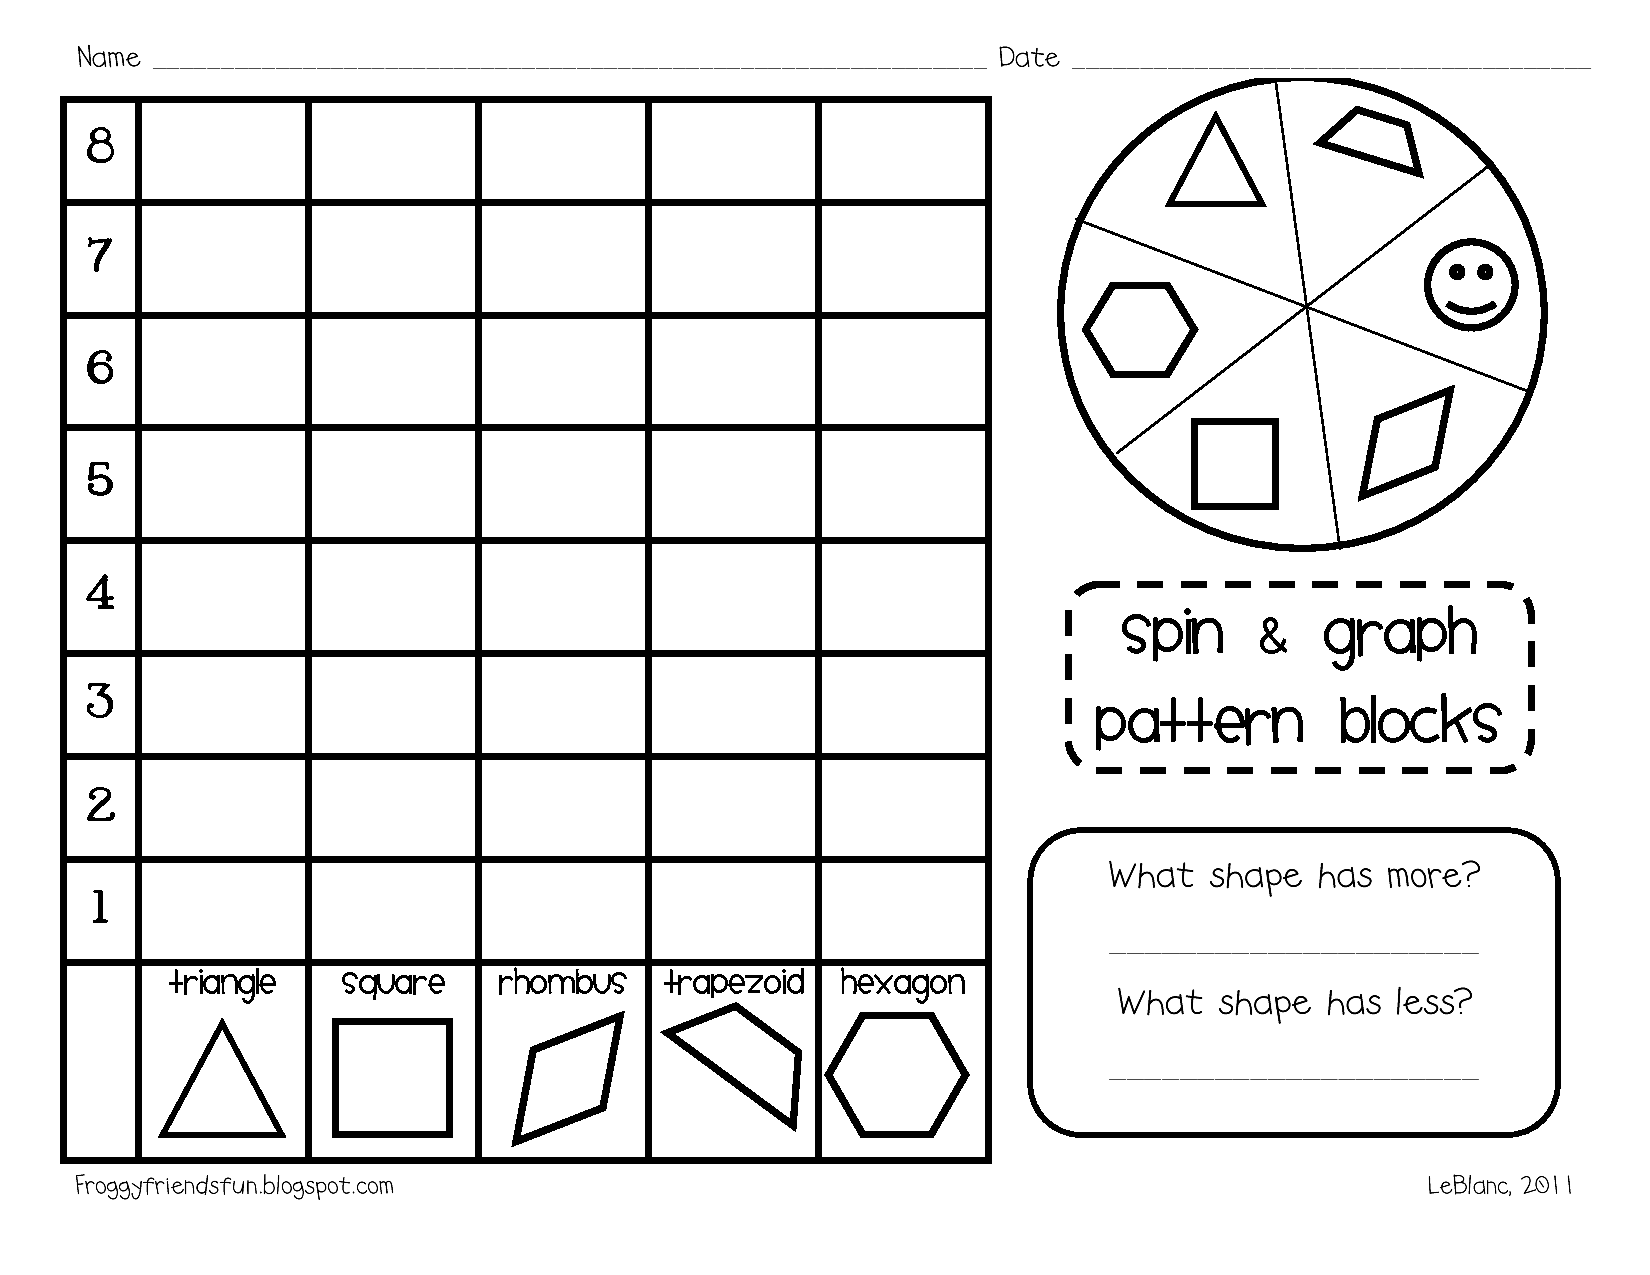 pattern-block-activities-4th-grade